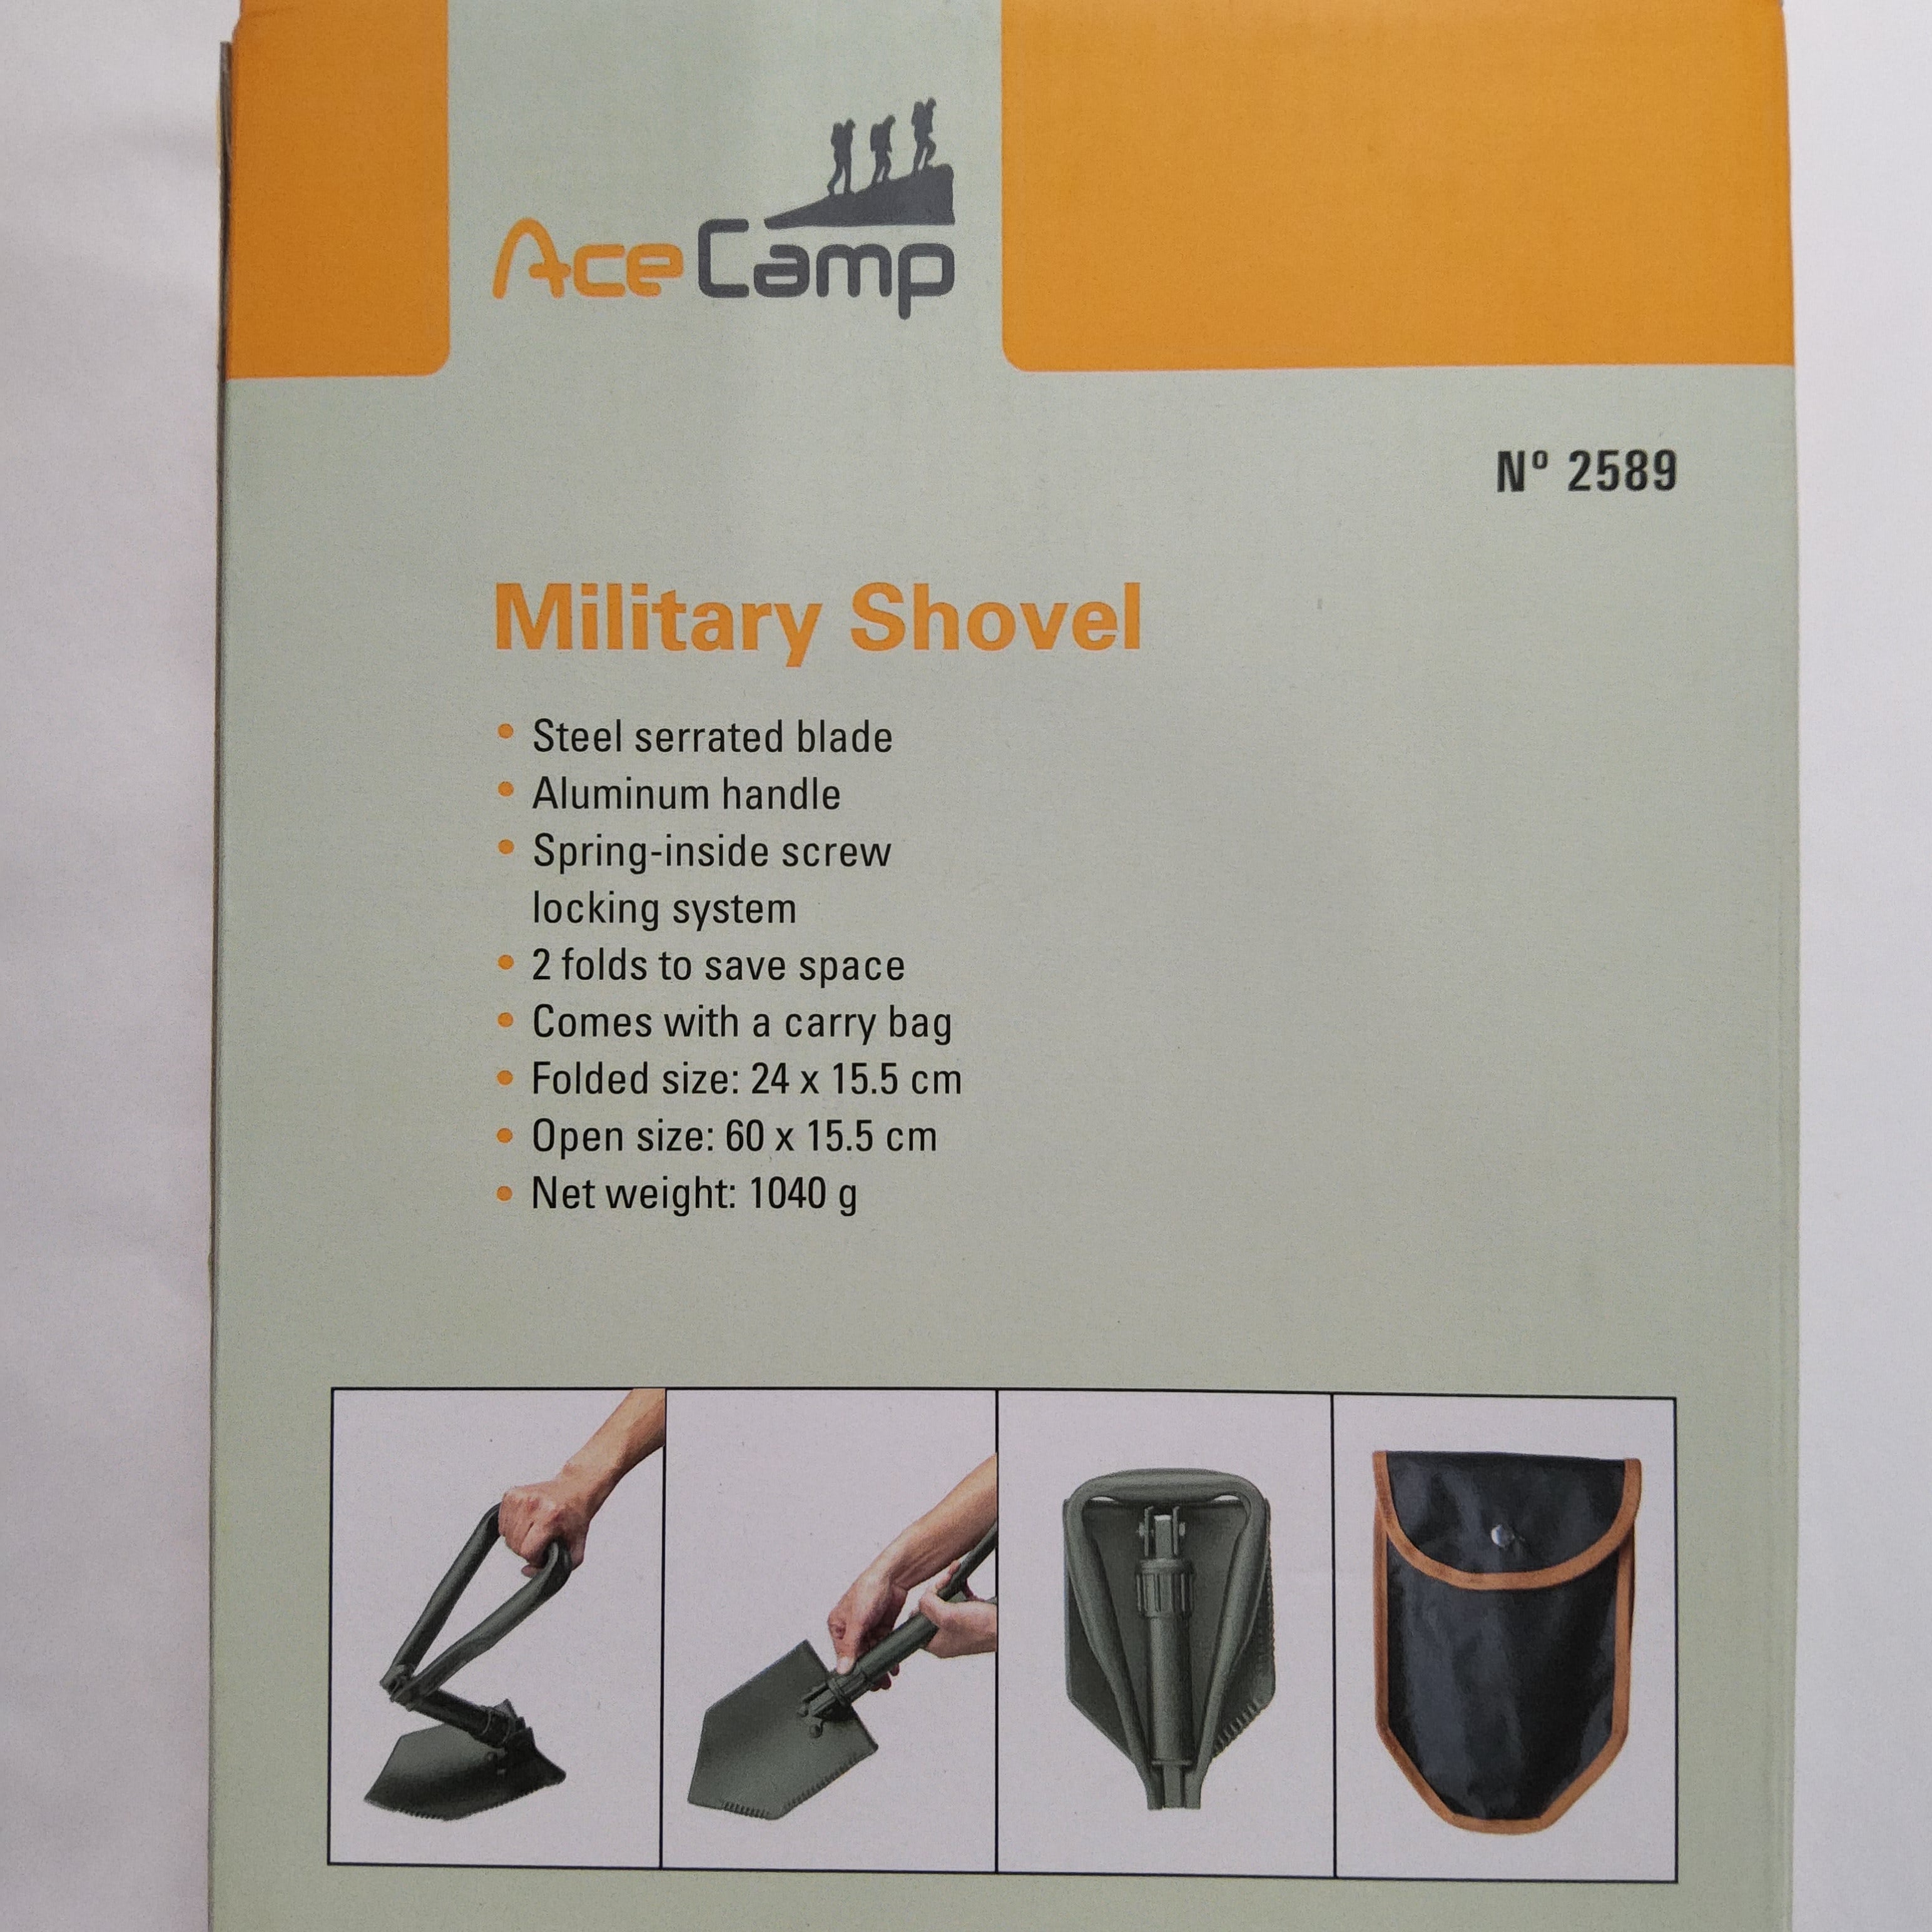 Ace Camp Military Shovel #2589